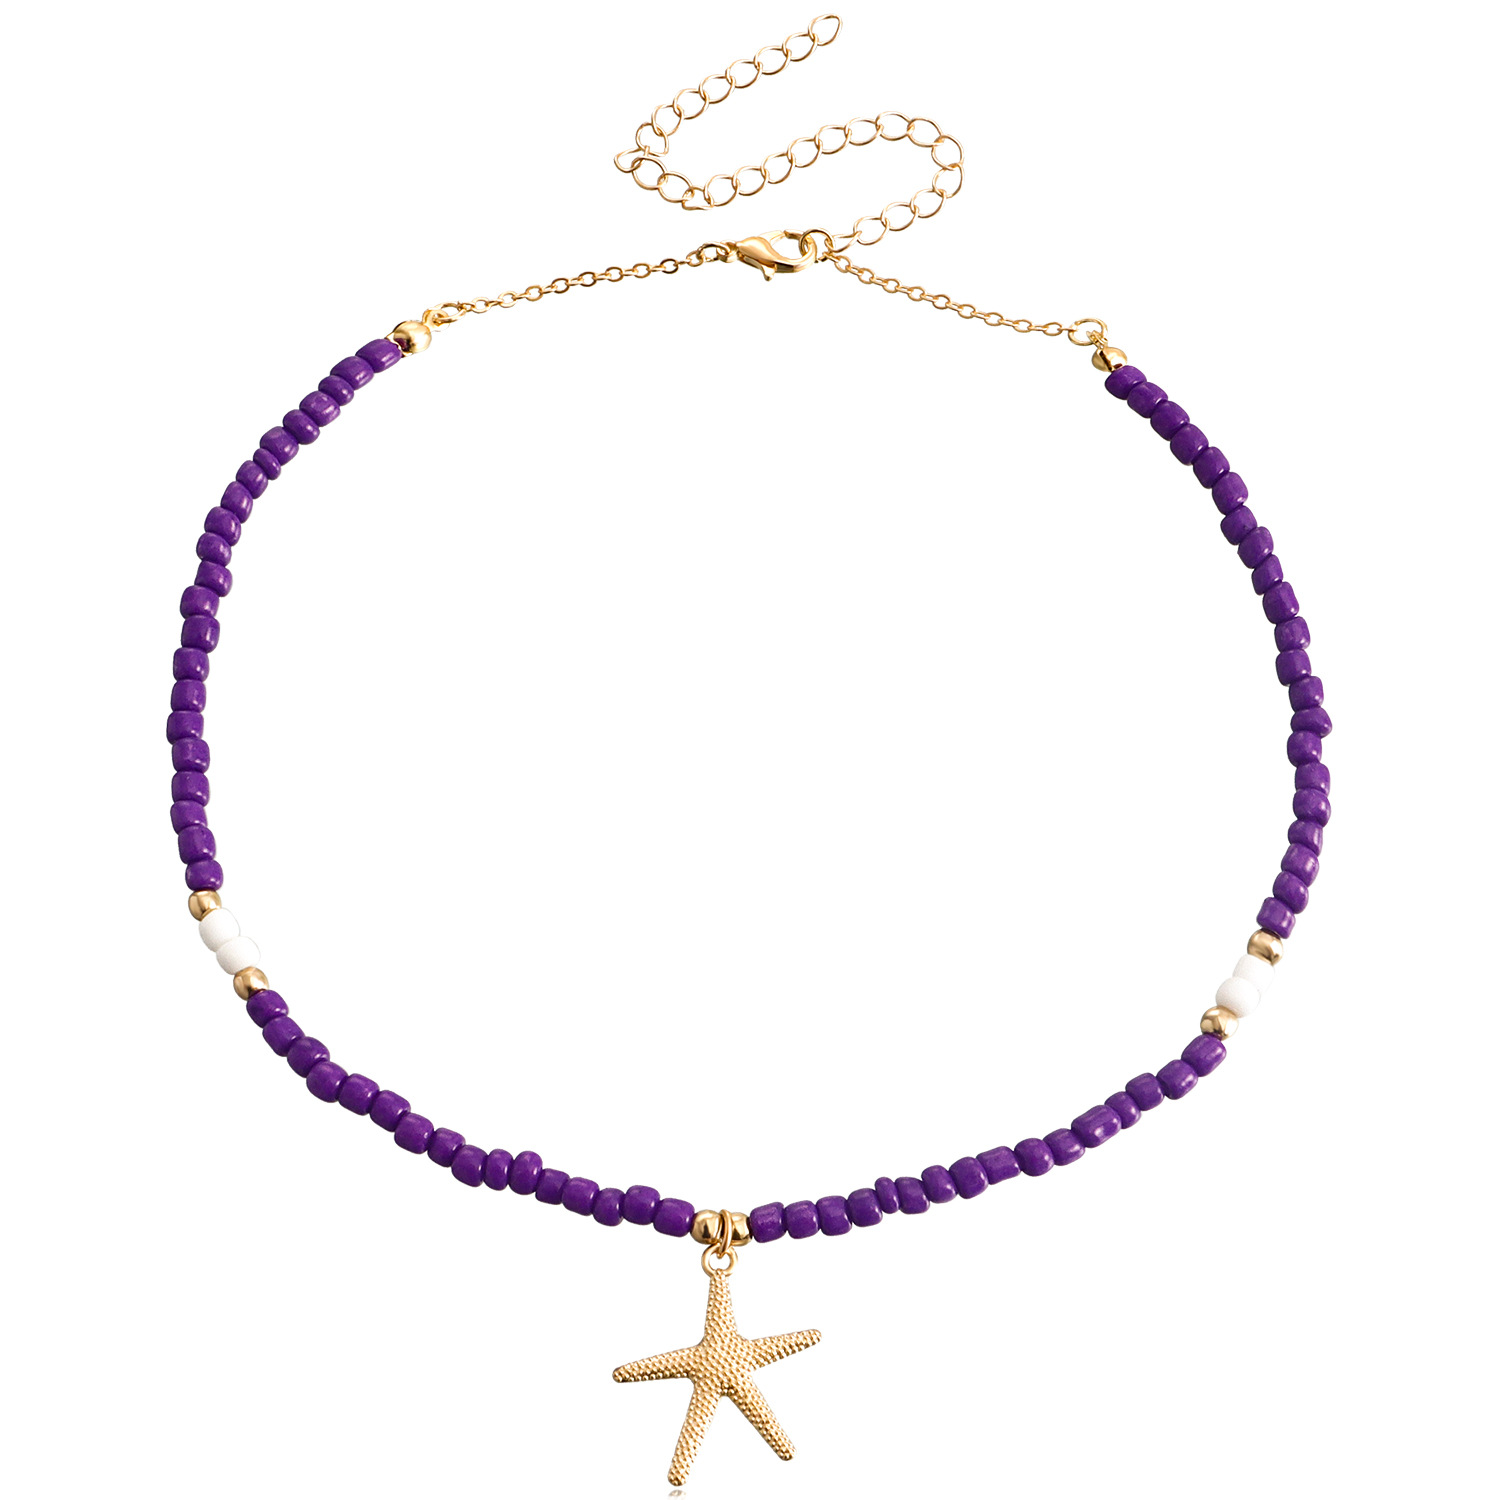 3# purple rice beads